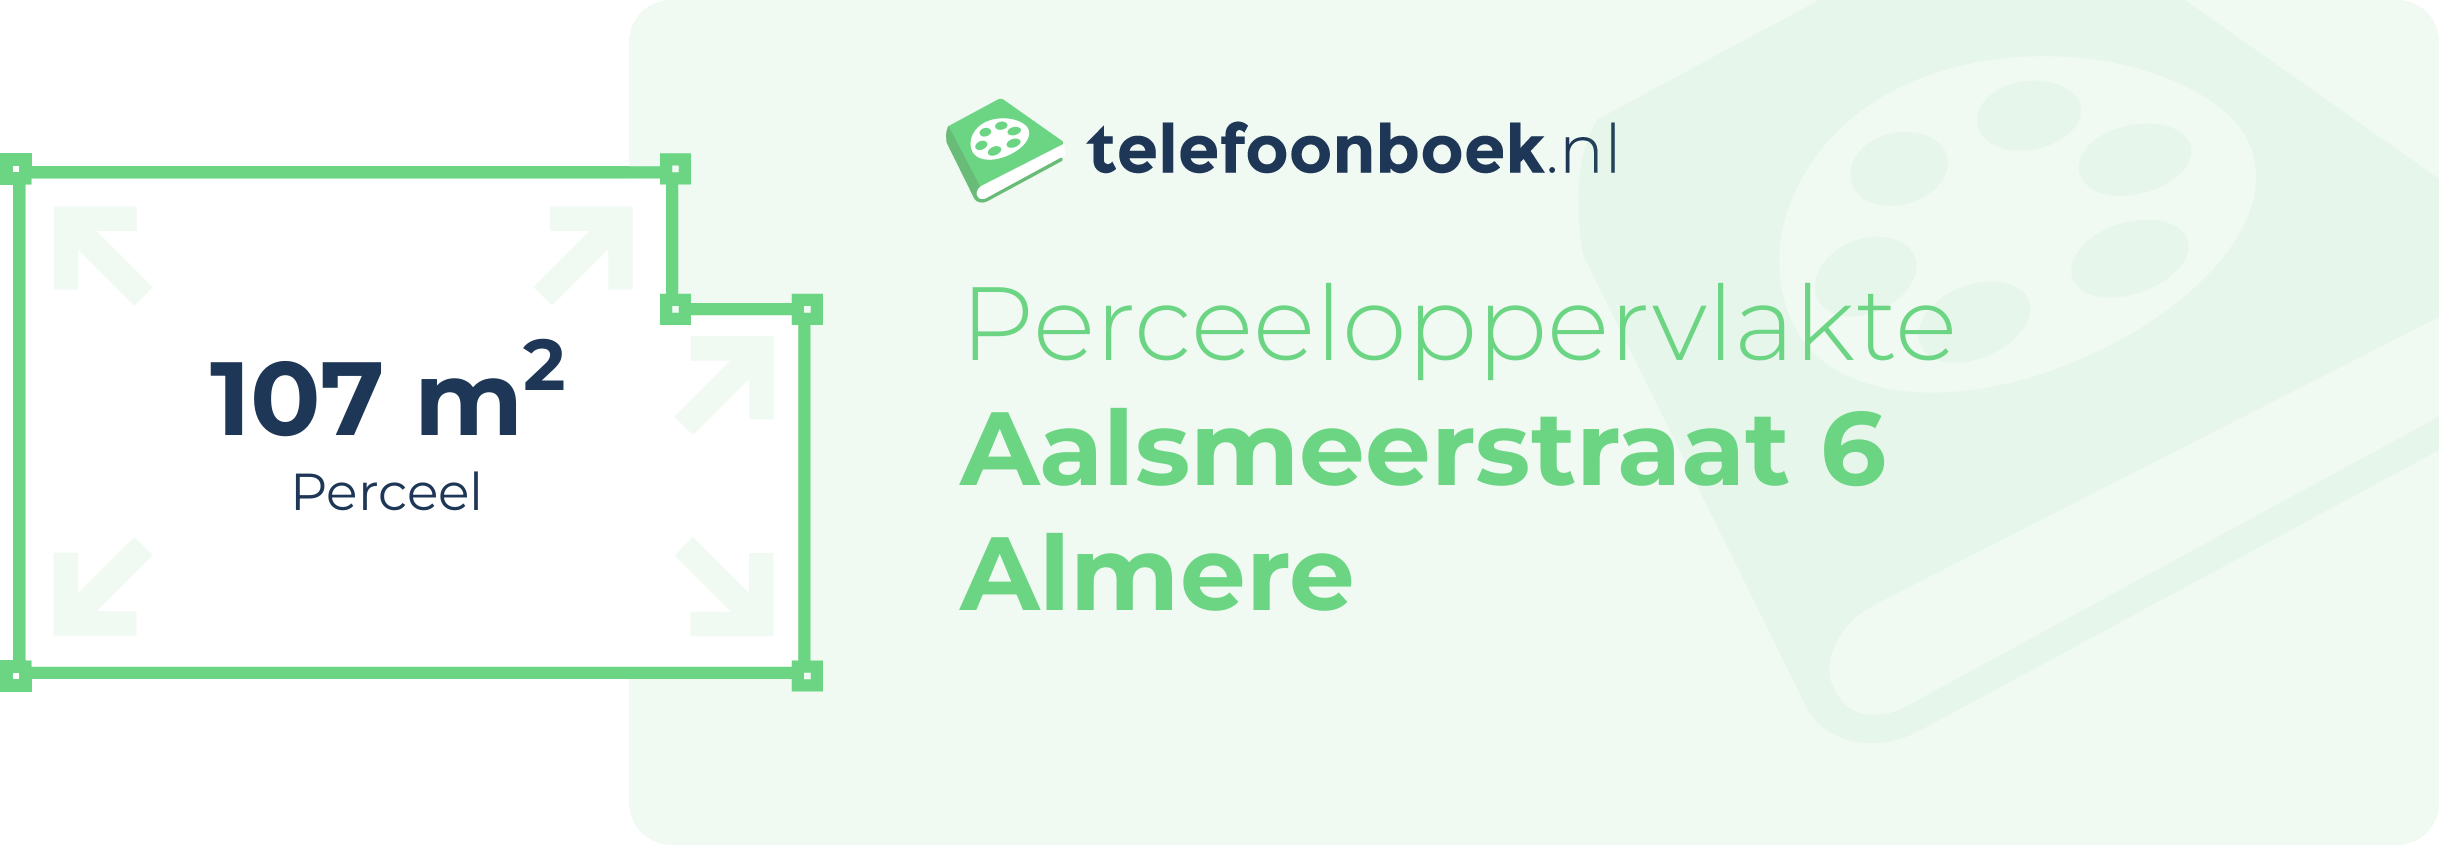 Perceeloppervlakte Aalsmeerstraat 6 Almere